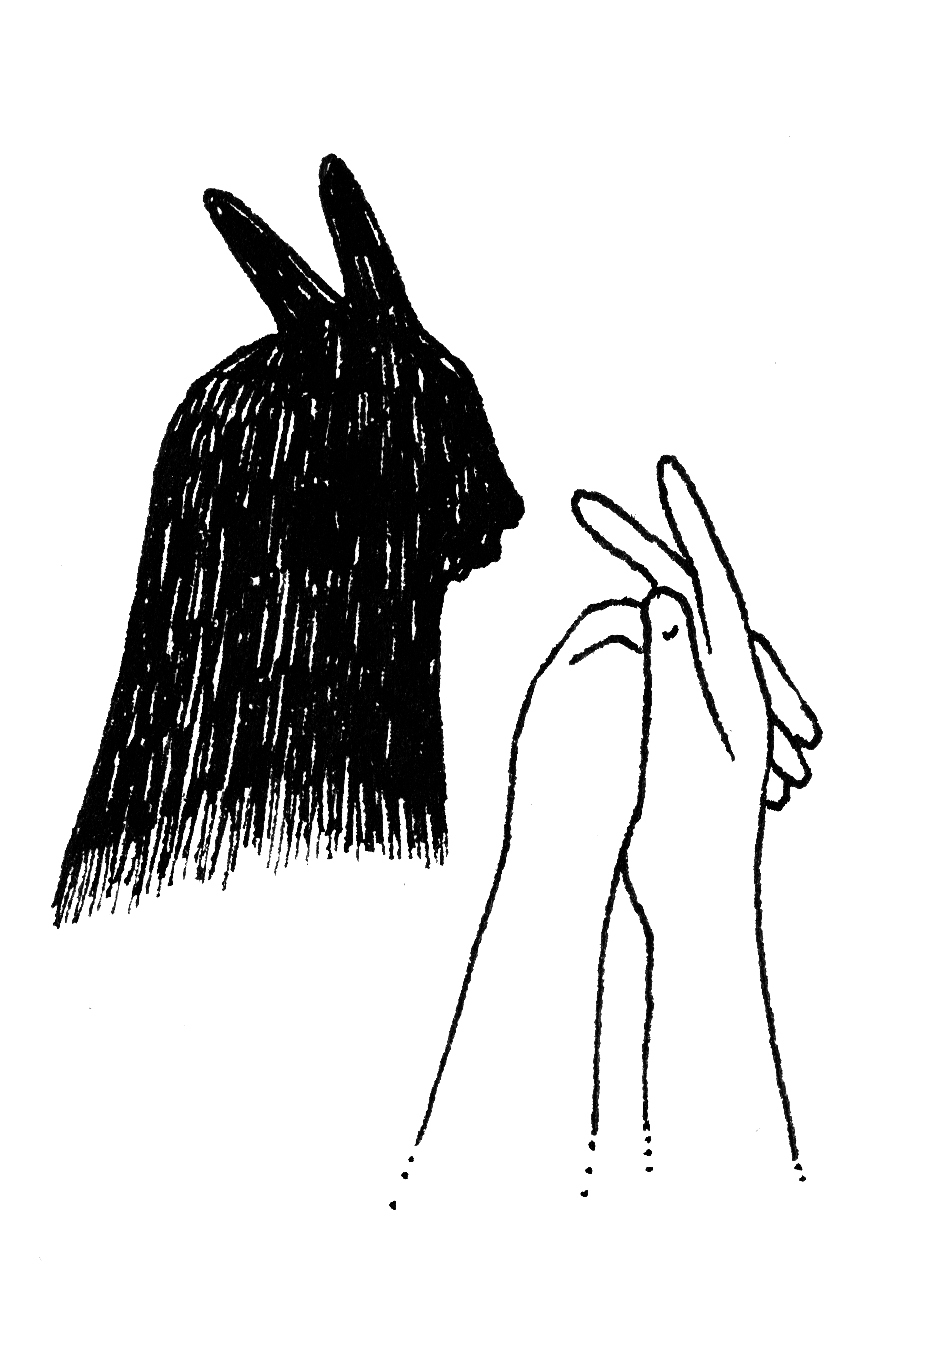 Shadow puppet of a rabbit